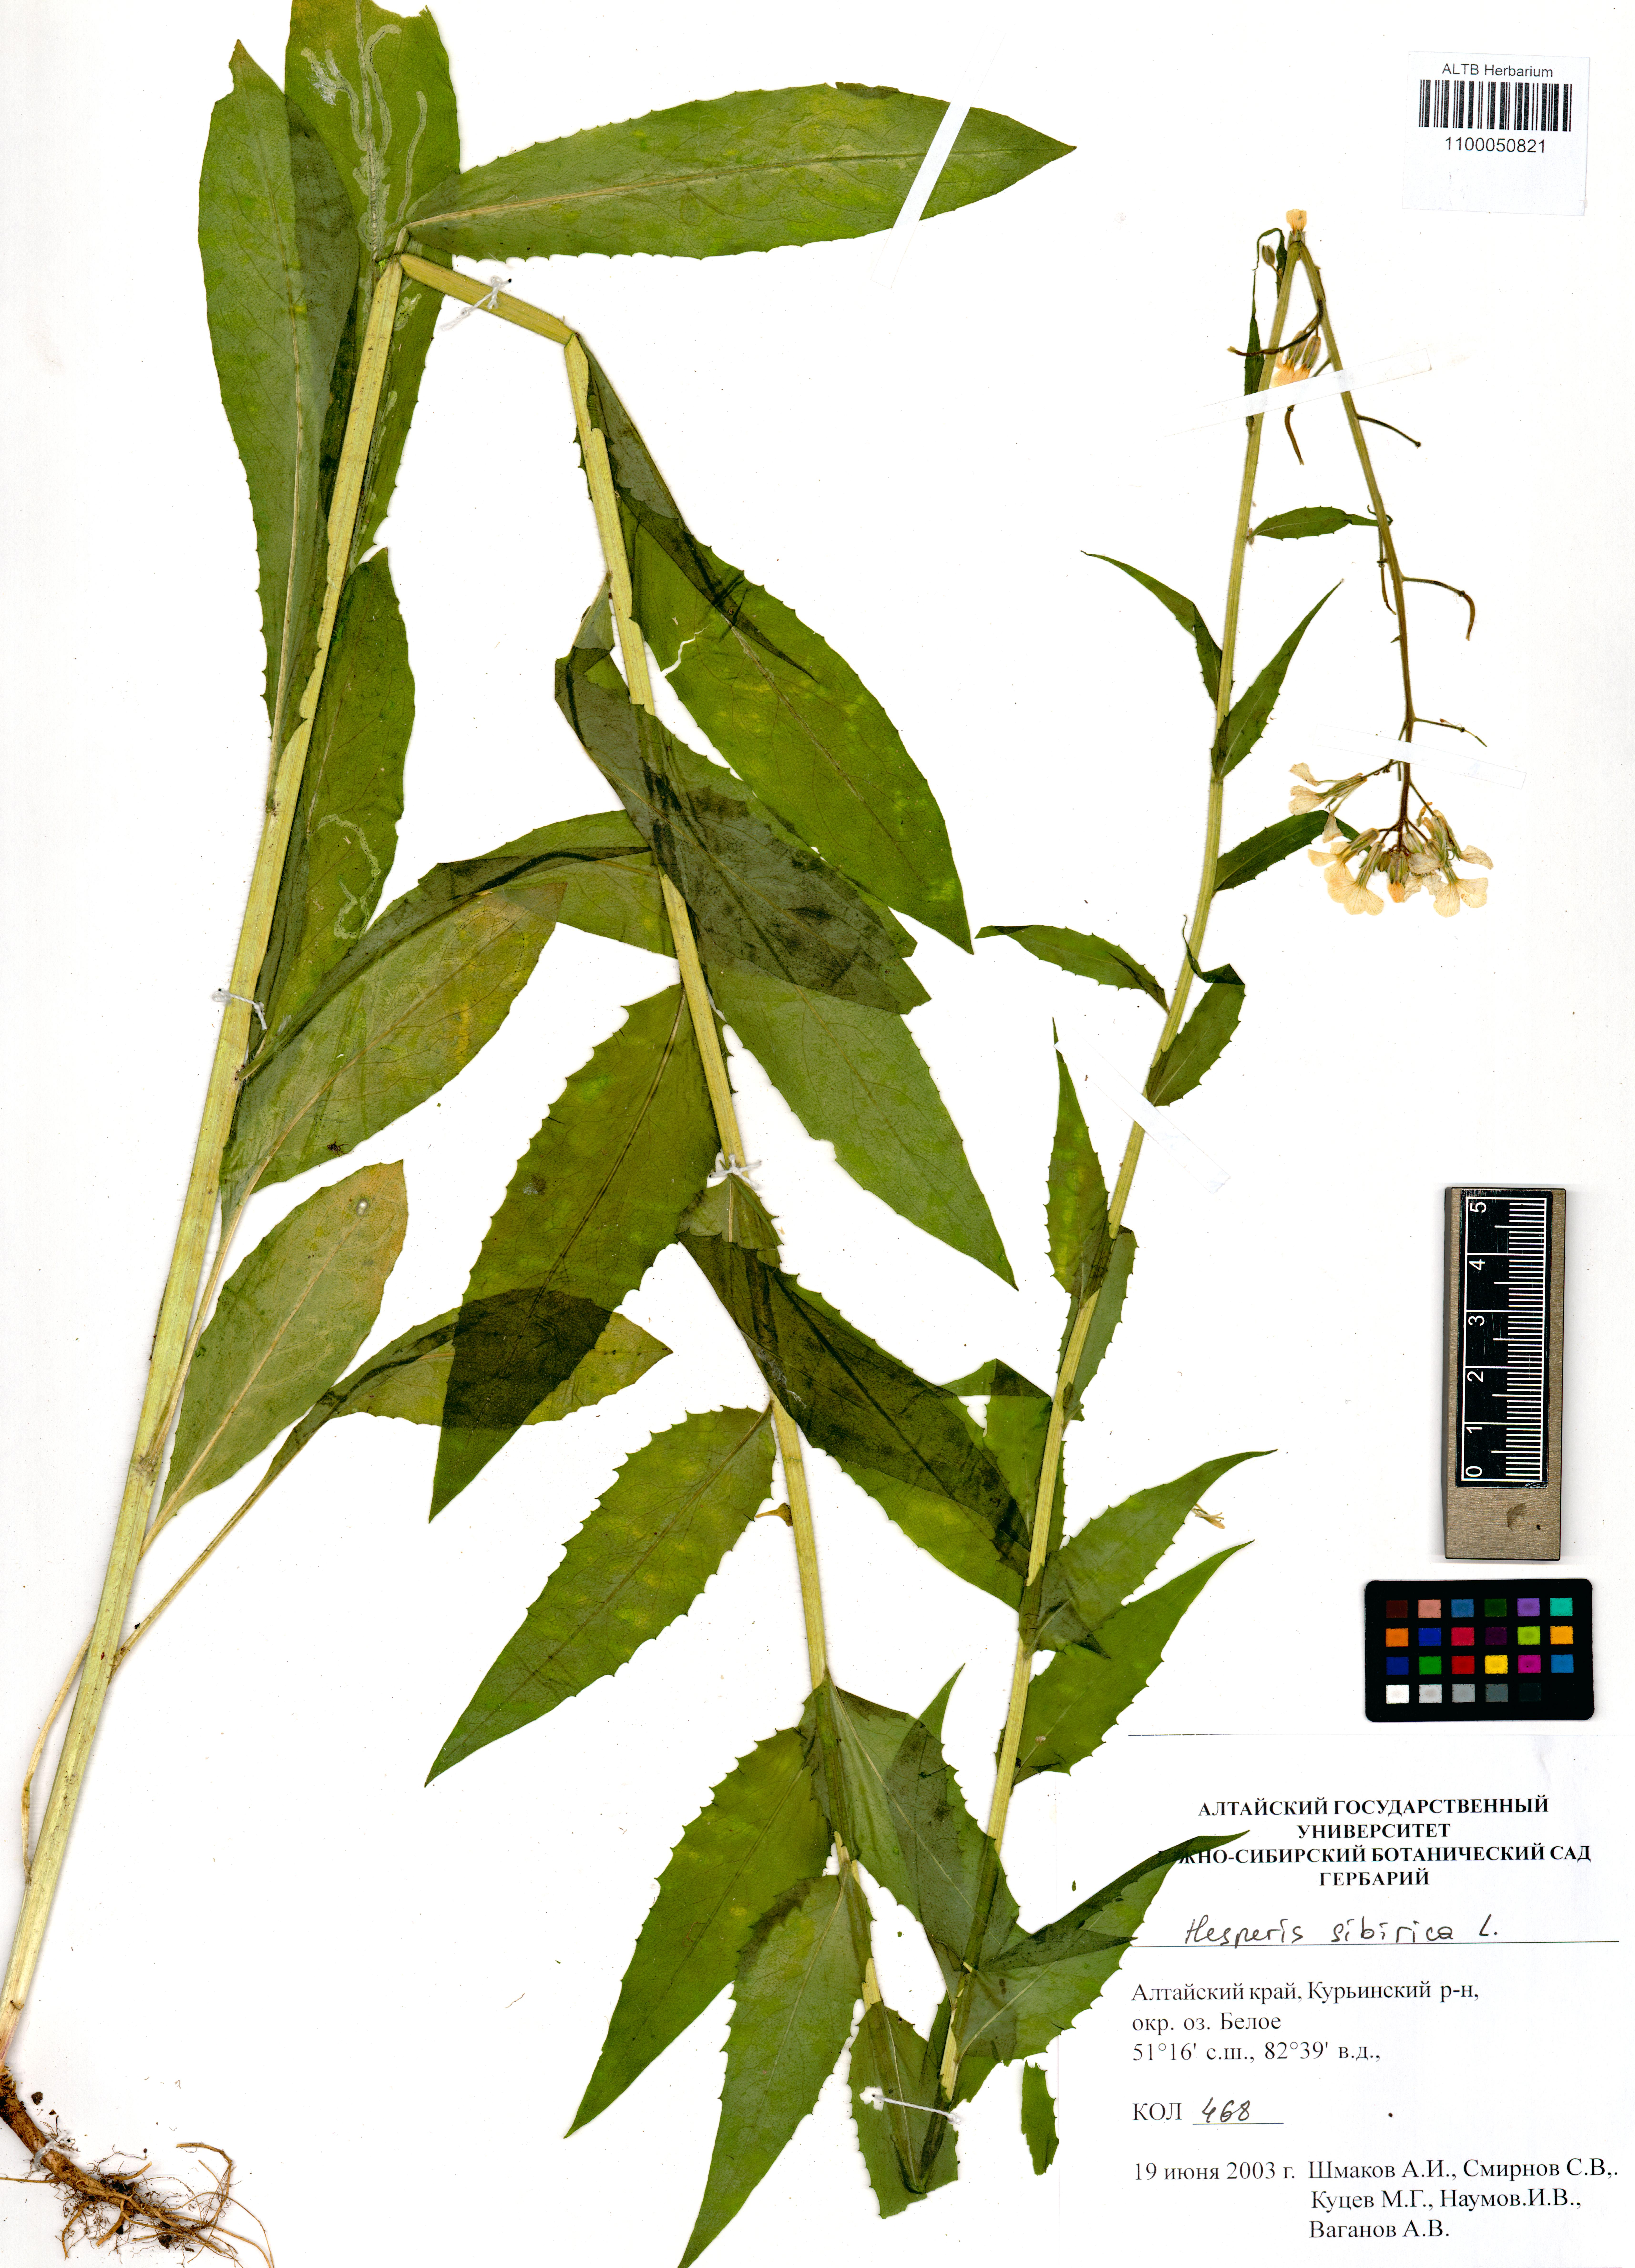 Hesperis sibirica L.